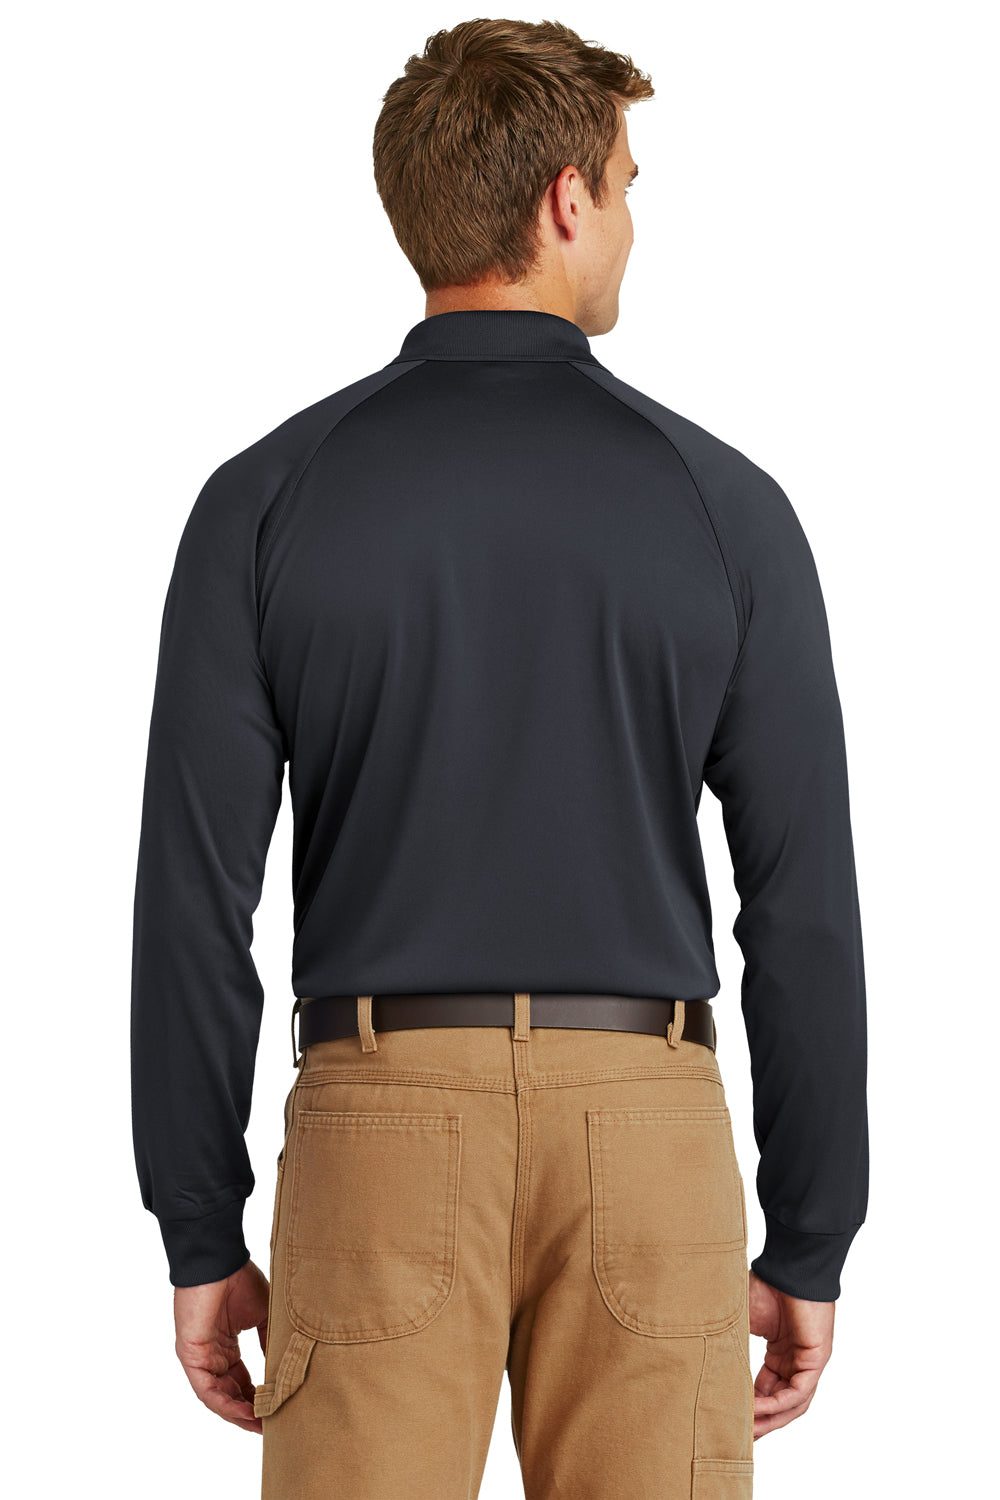 CornerStone CS410LS Mens Select Tactical Moisture Wicking Long Sleeve Polo Shirt Charcoal Grey Back